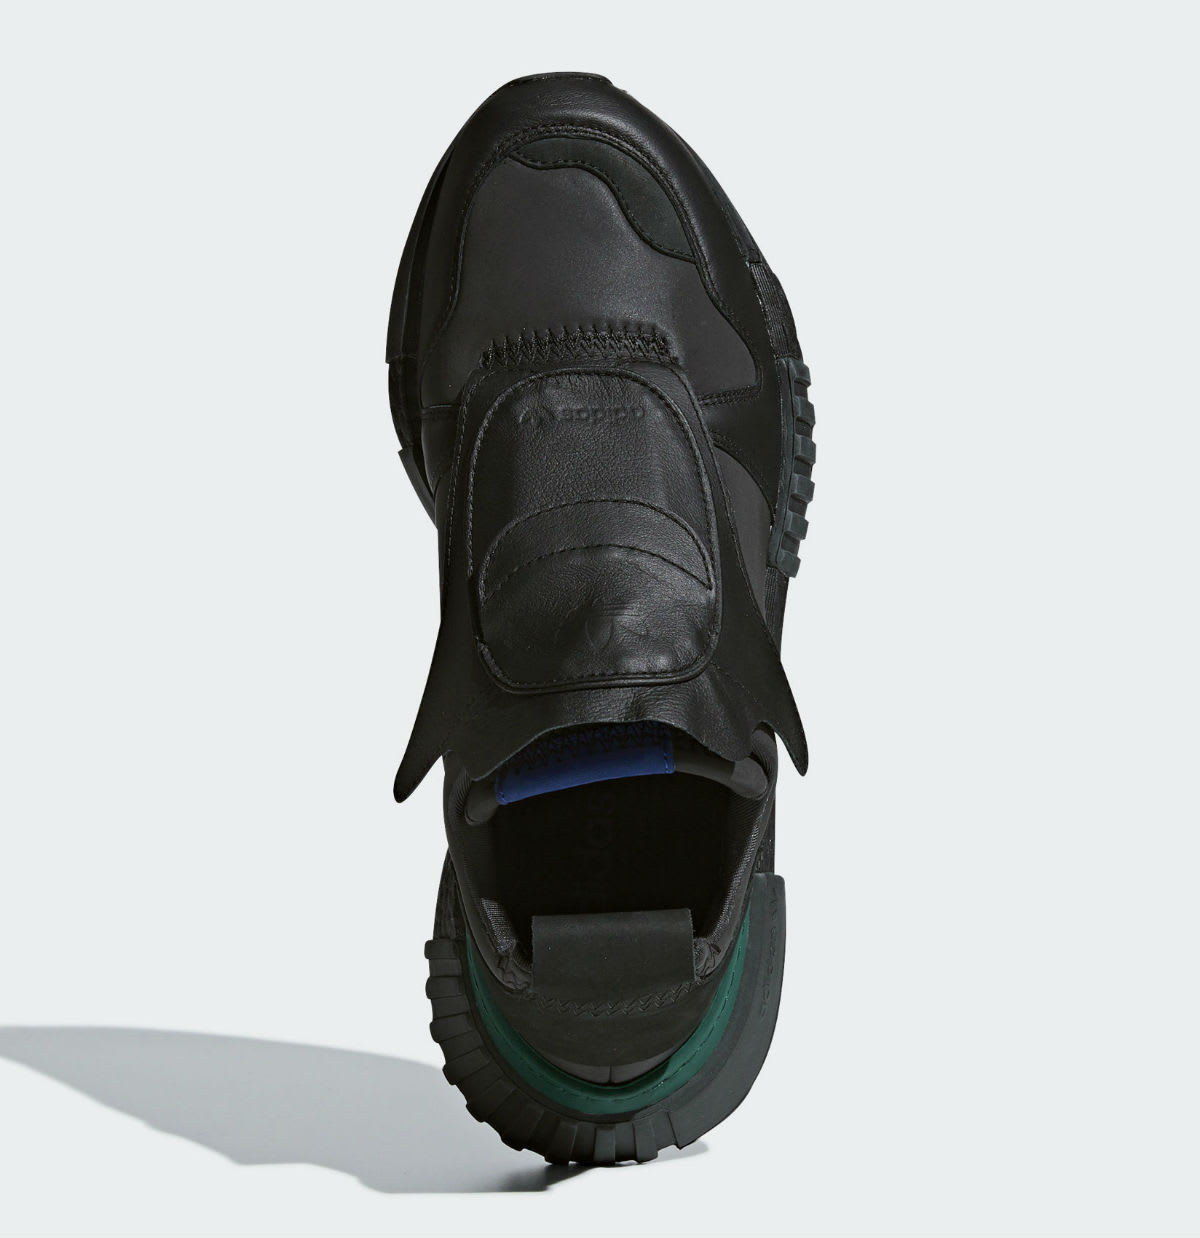 Adidas Futurepacer Black Release Date B37266 Top